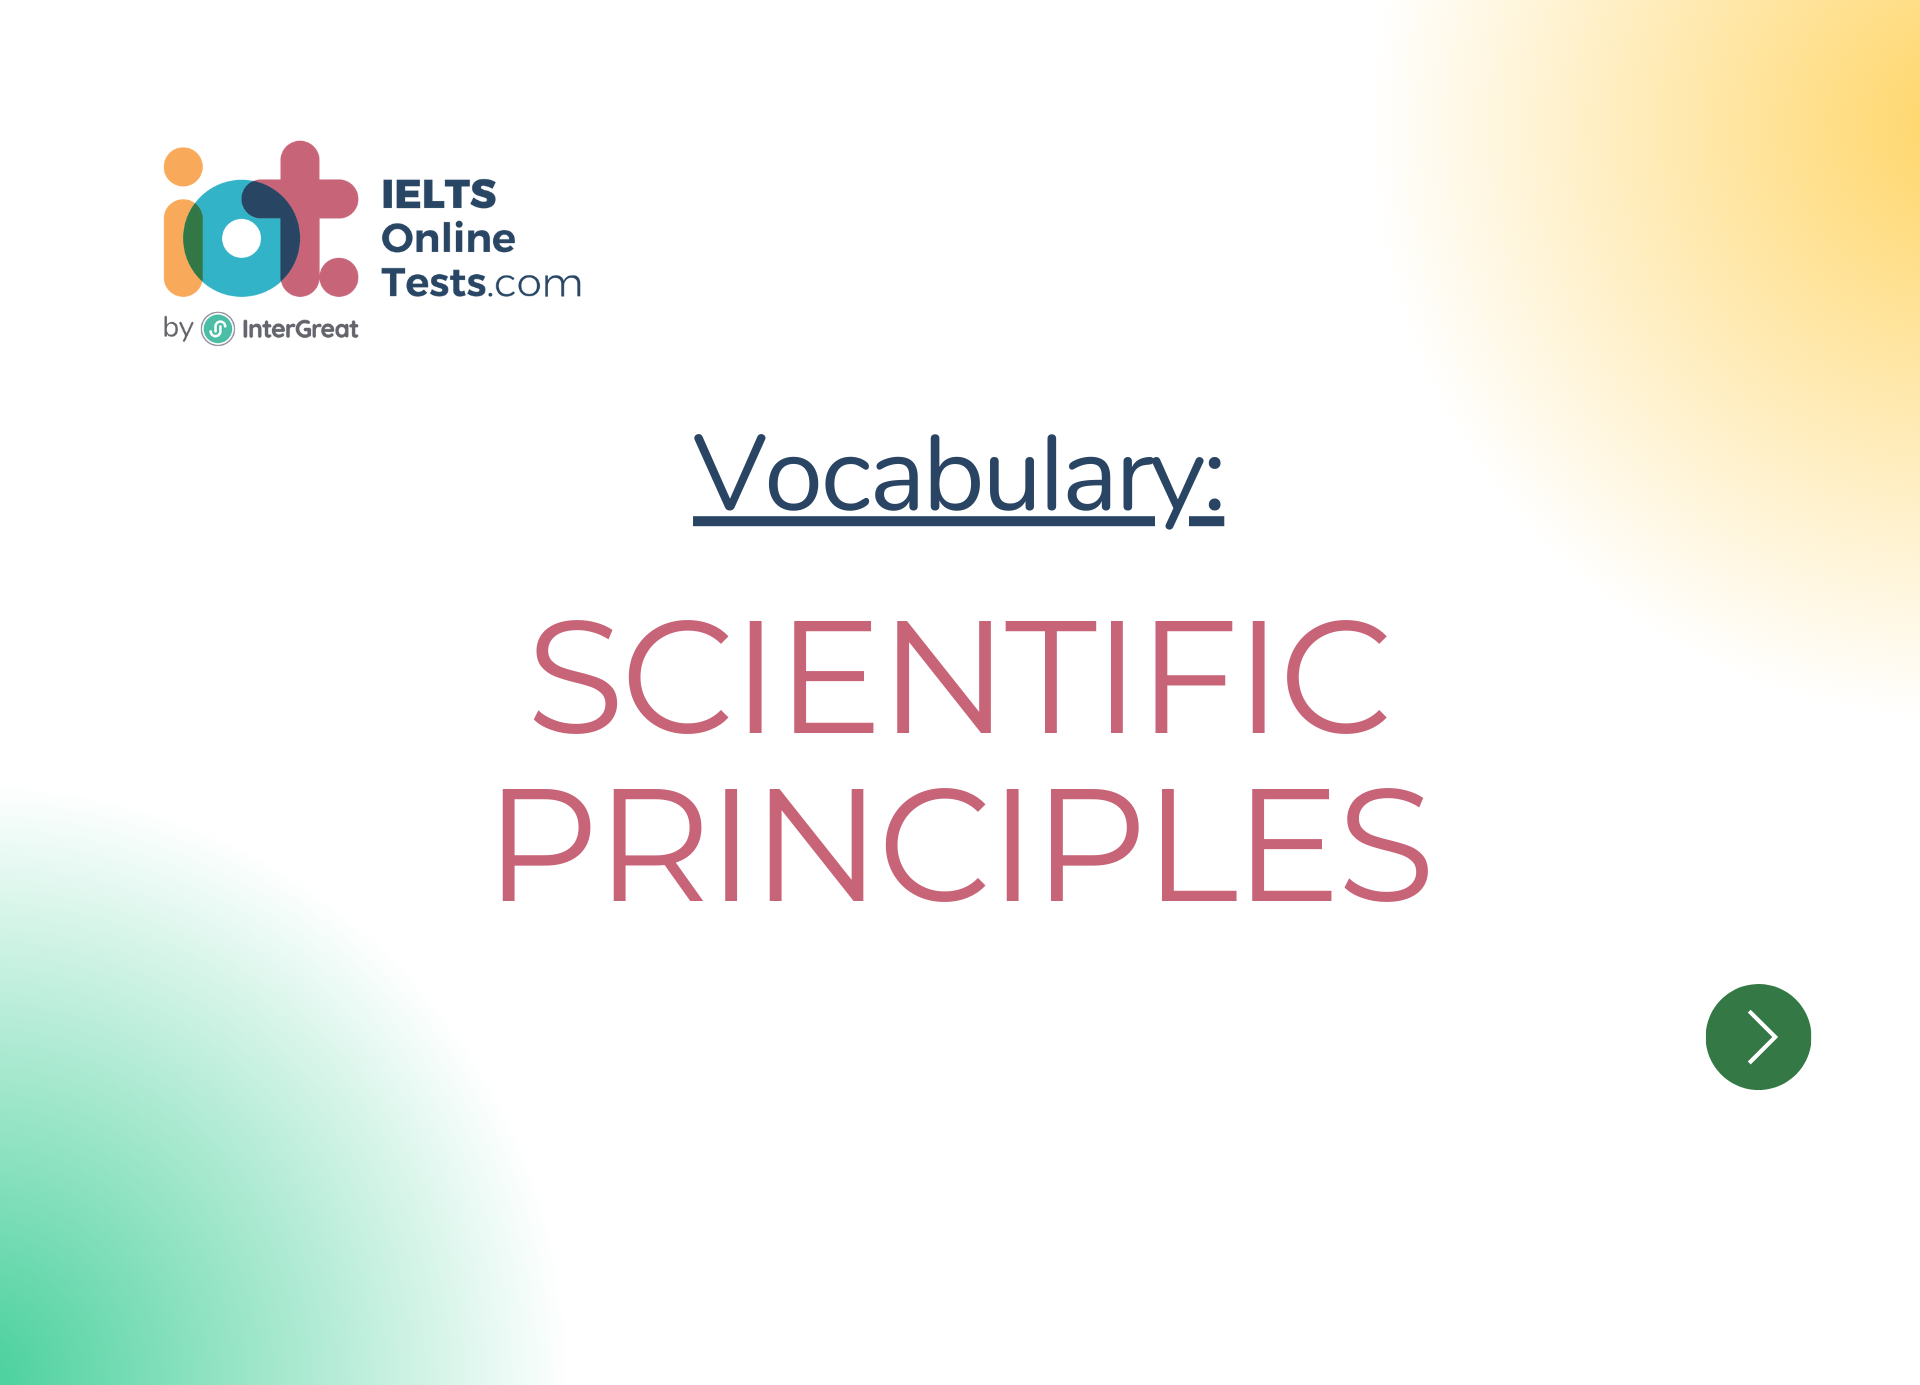 Scientific principles